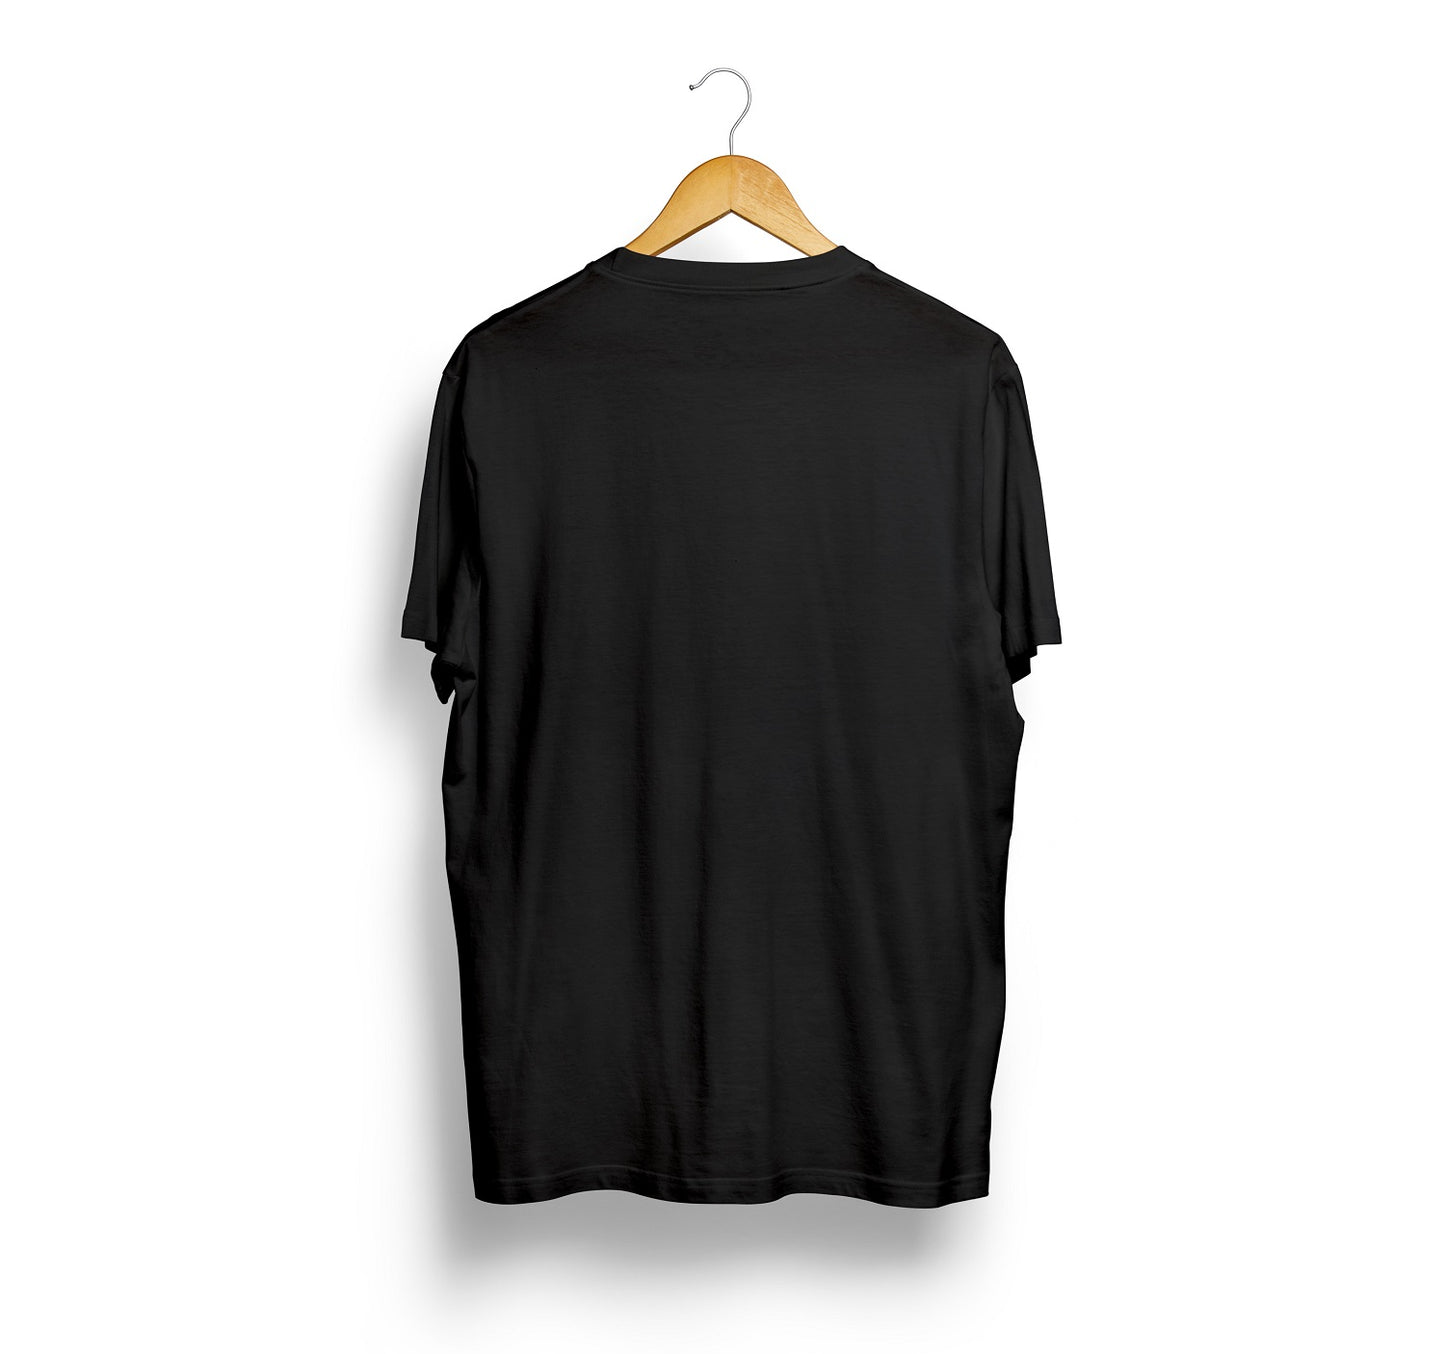 iberrys Printed T-Shirt for Men |Funny Quote Tshirt | Half Sleeve T-Shirt | Round Neck T Shirt |Cotton T-Shirt for Men- SuperLaunda